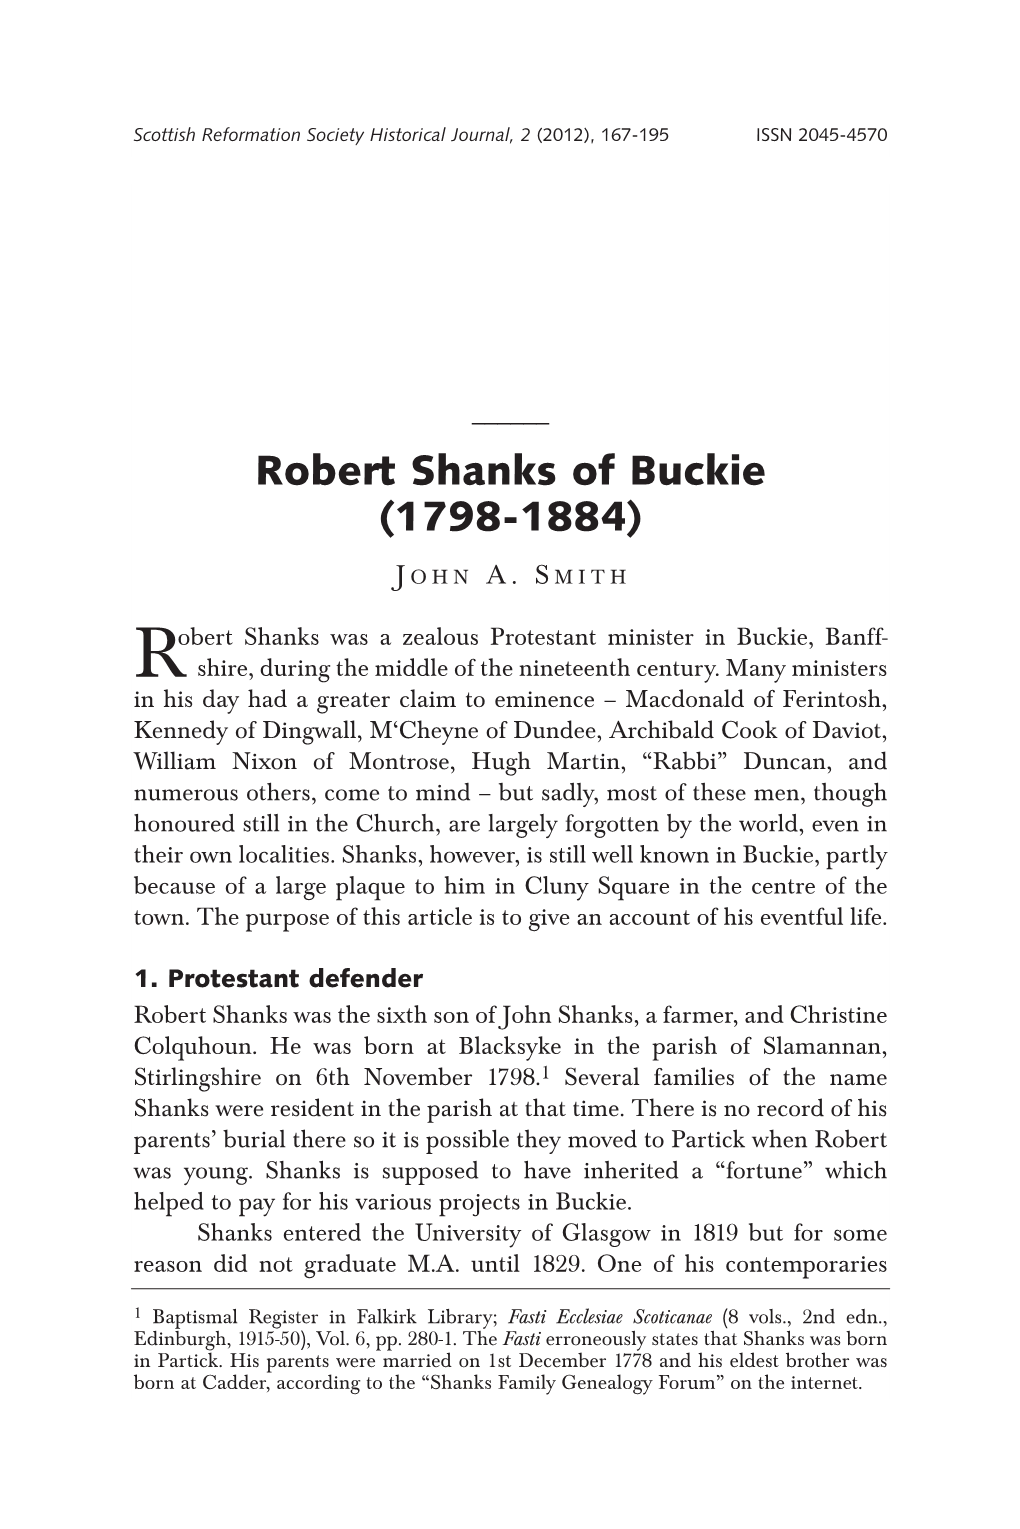 Robert Shanks of Buckie (1798-1884)